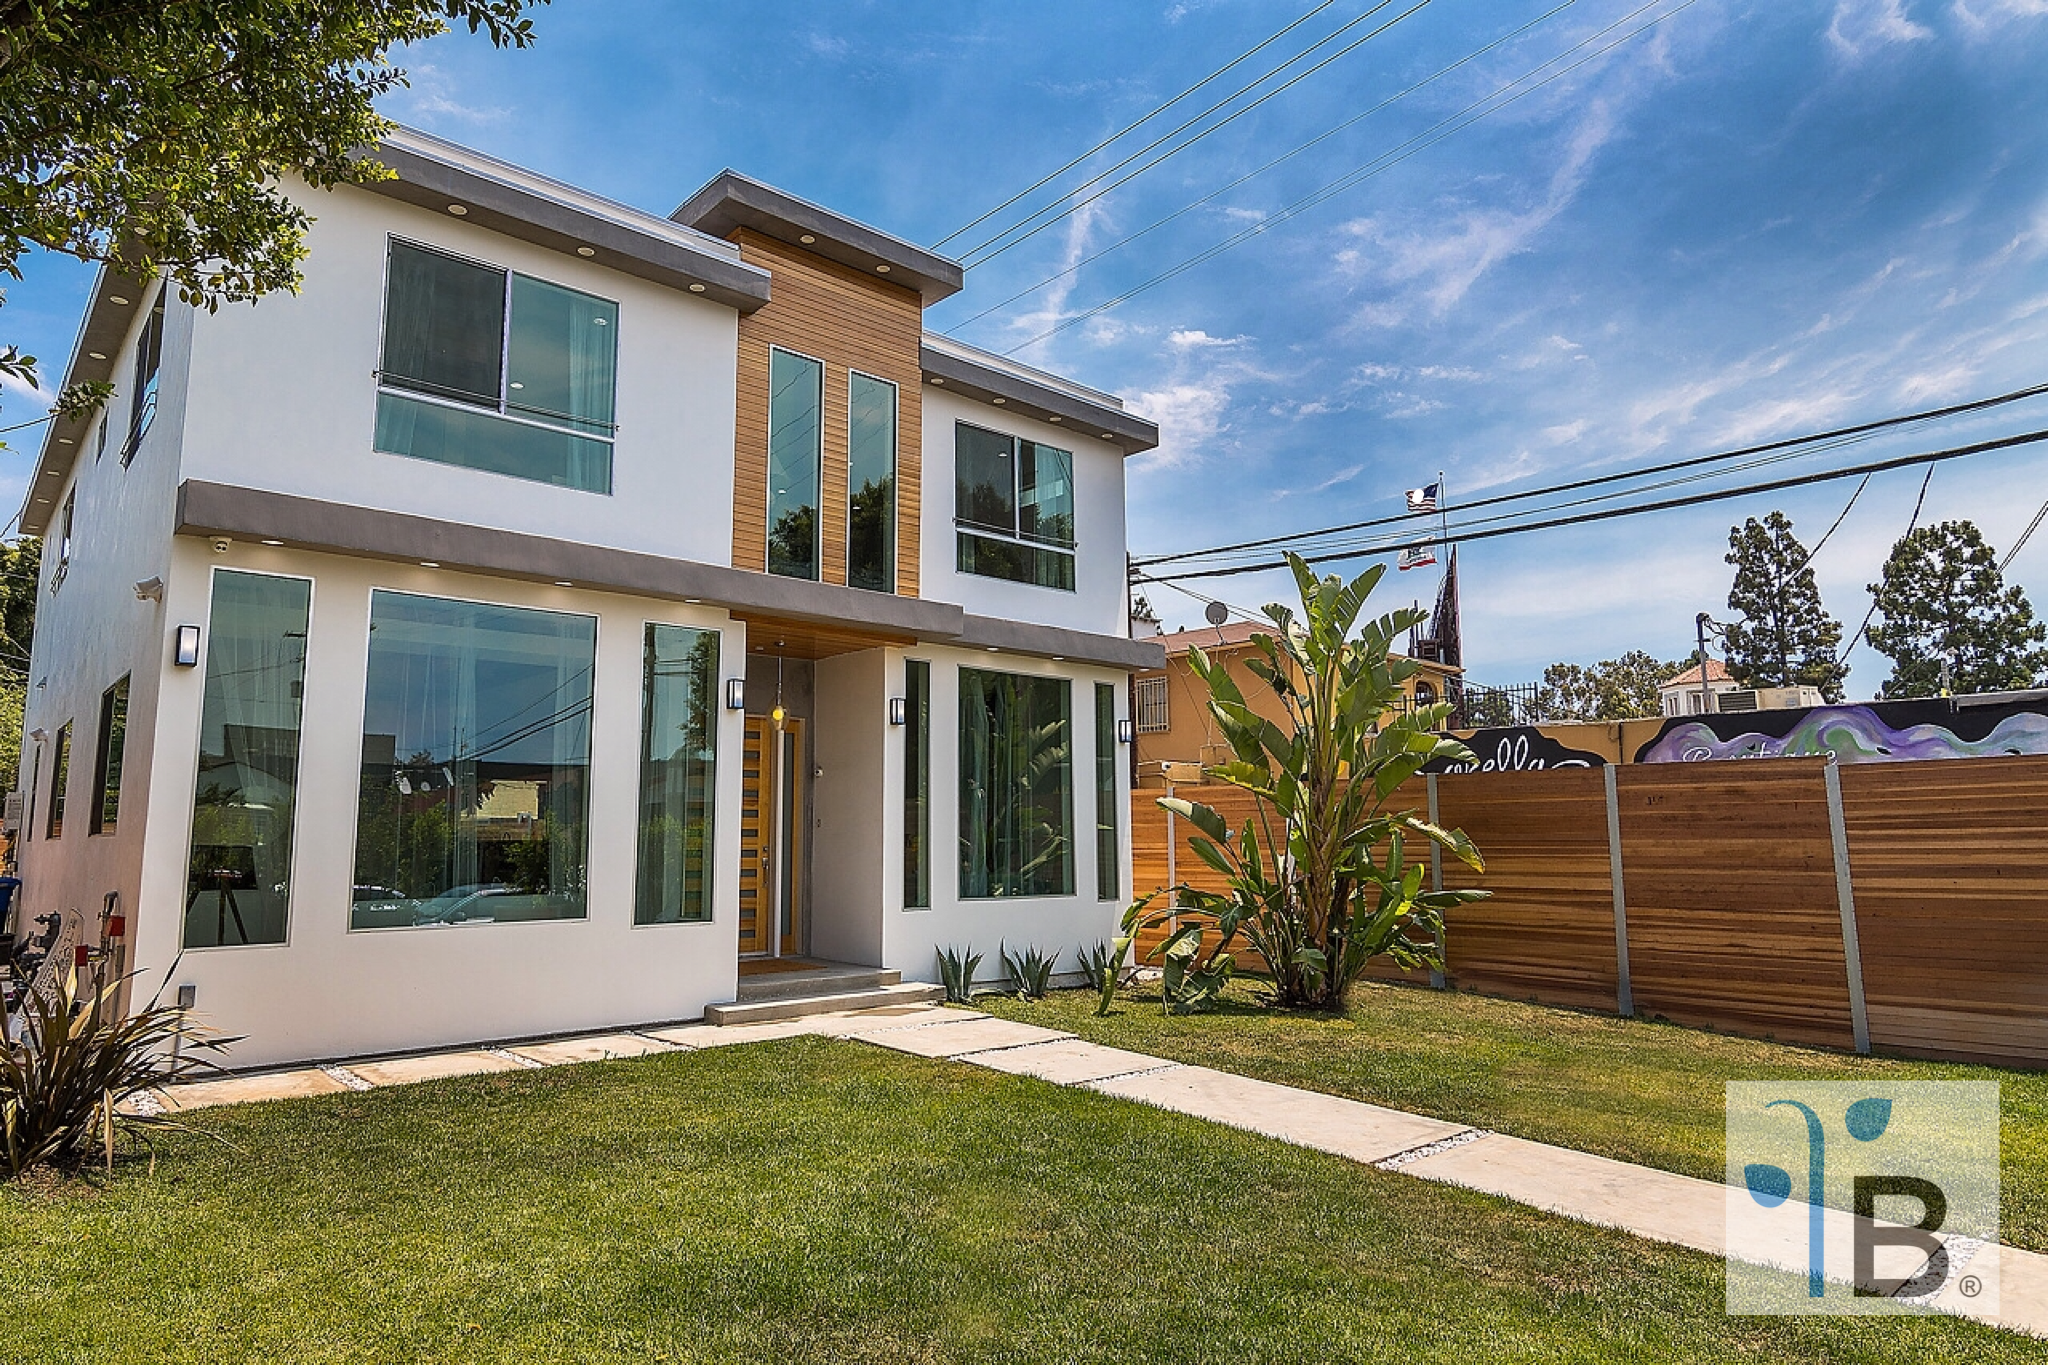 Best Recent Home Sale Los Angeles on Orange Grove